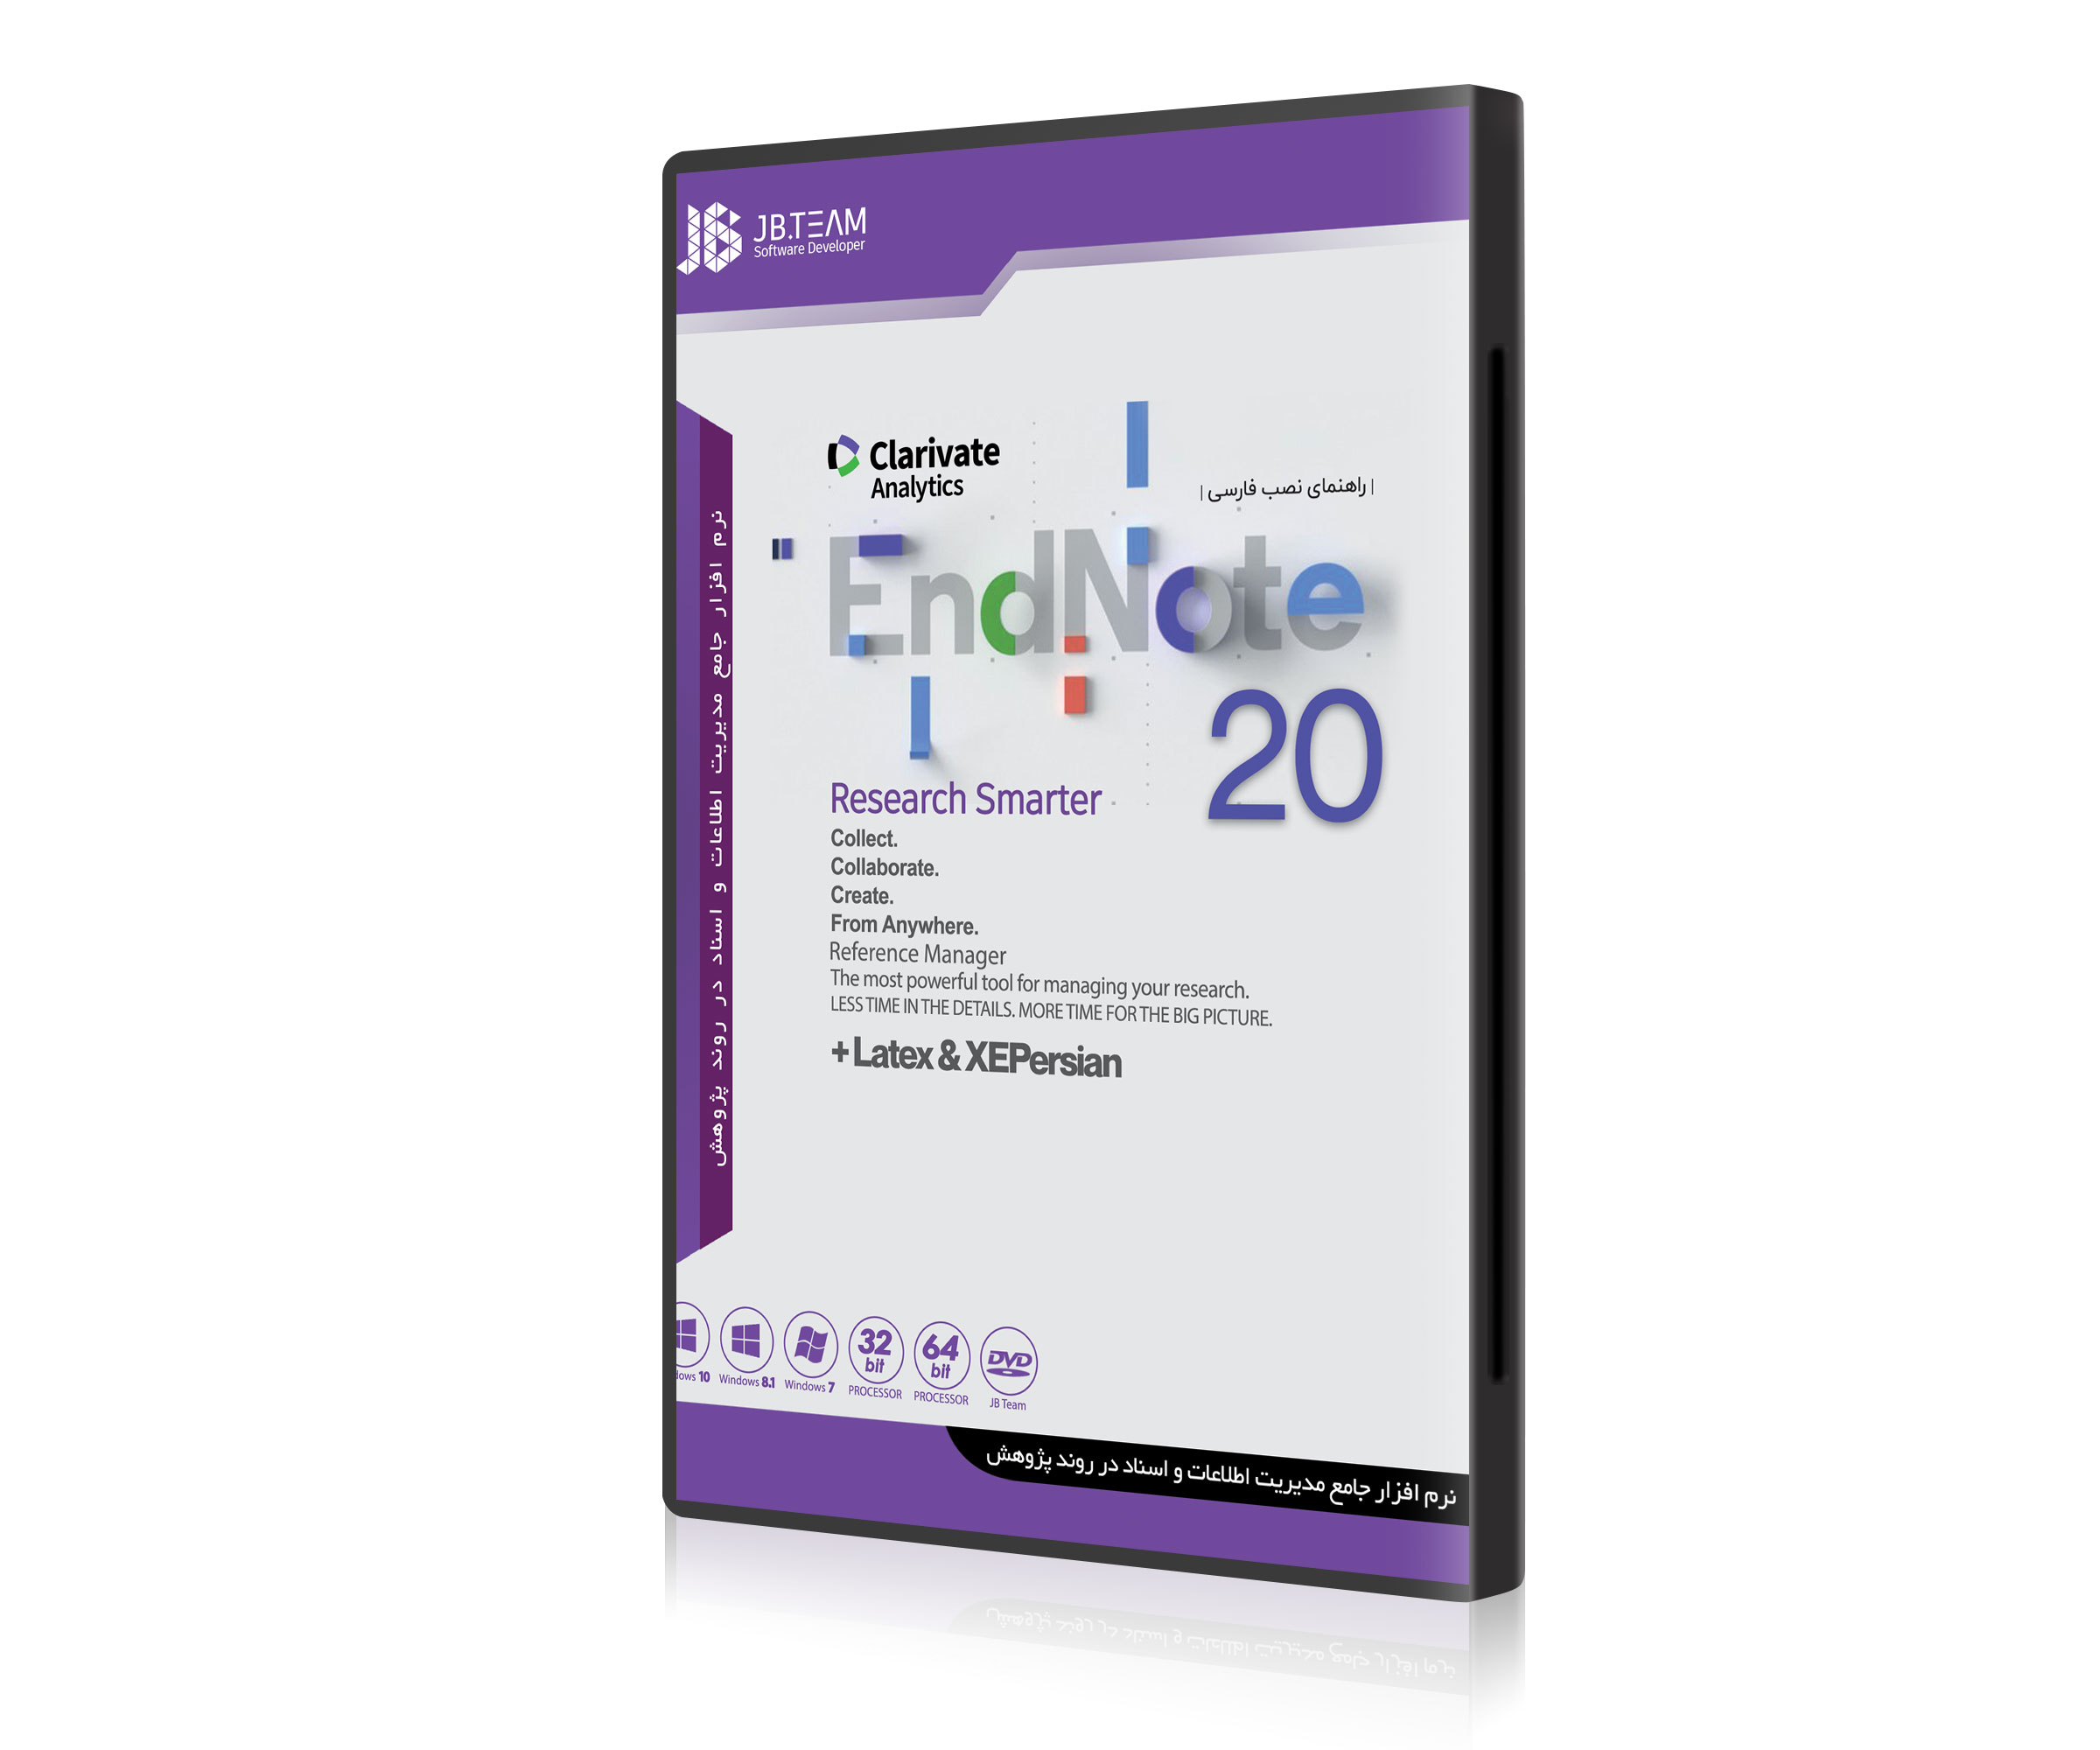 Endnote 20